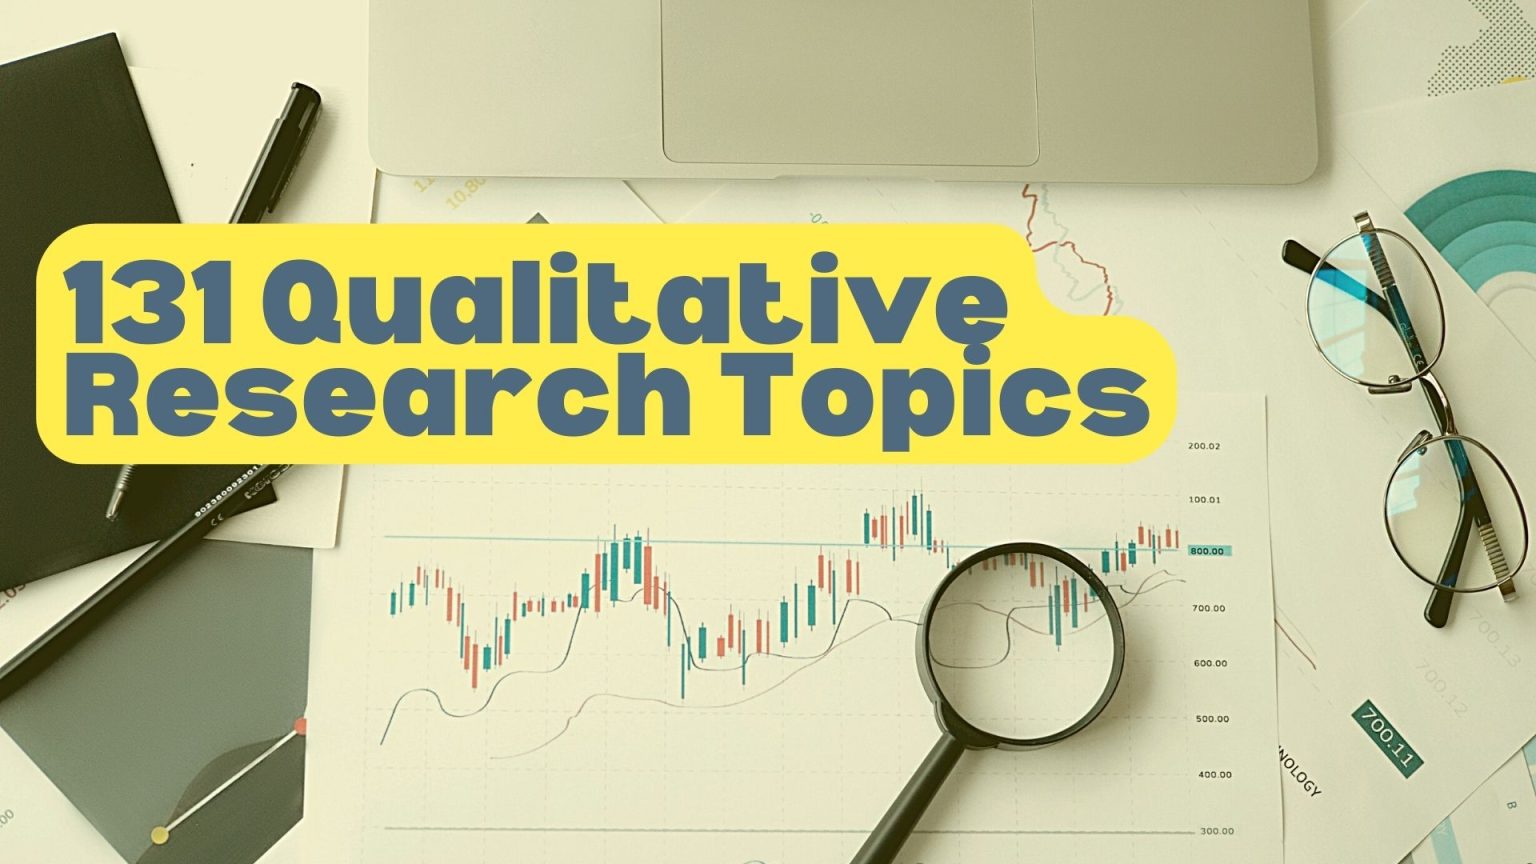 interesting topics for qualitative research